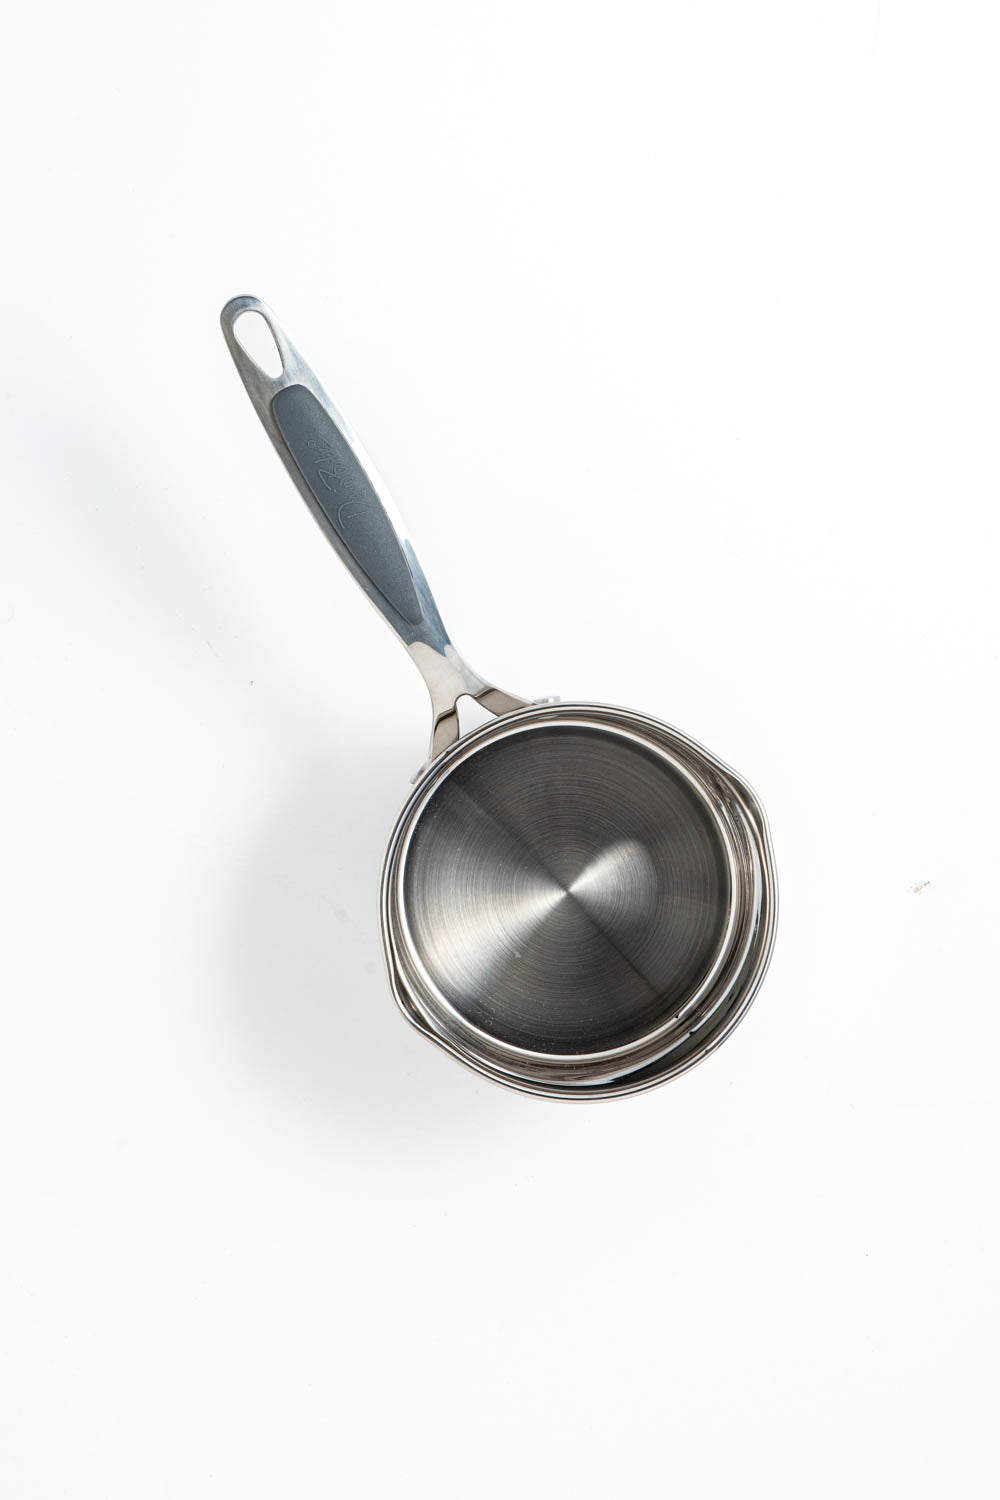 David Burke Gourmet Pro Stainless Steel 1.75 Quart Sauce Pan Pot W/ Lid